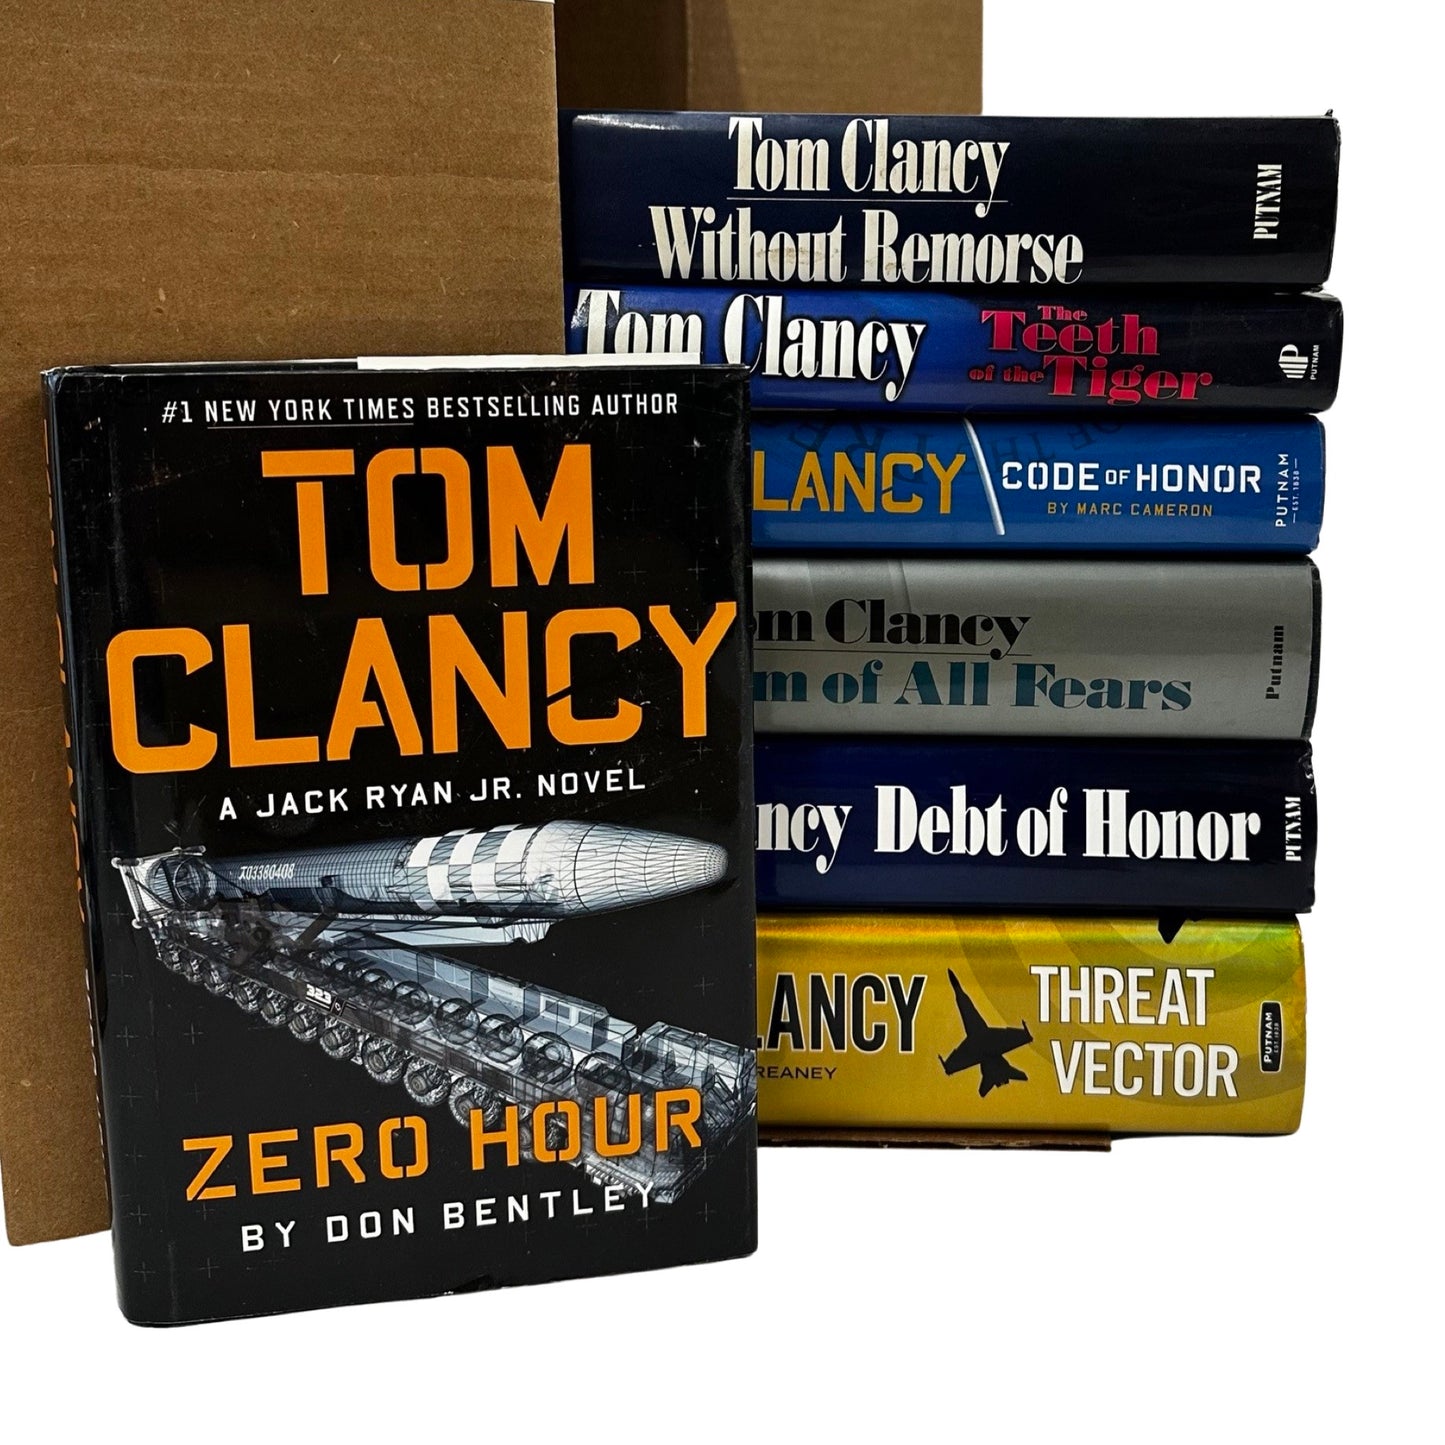 Tom Clancy books - Hardcovers